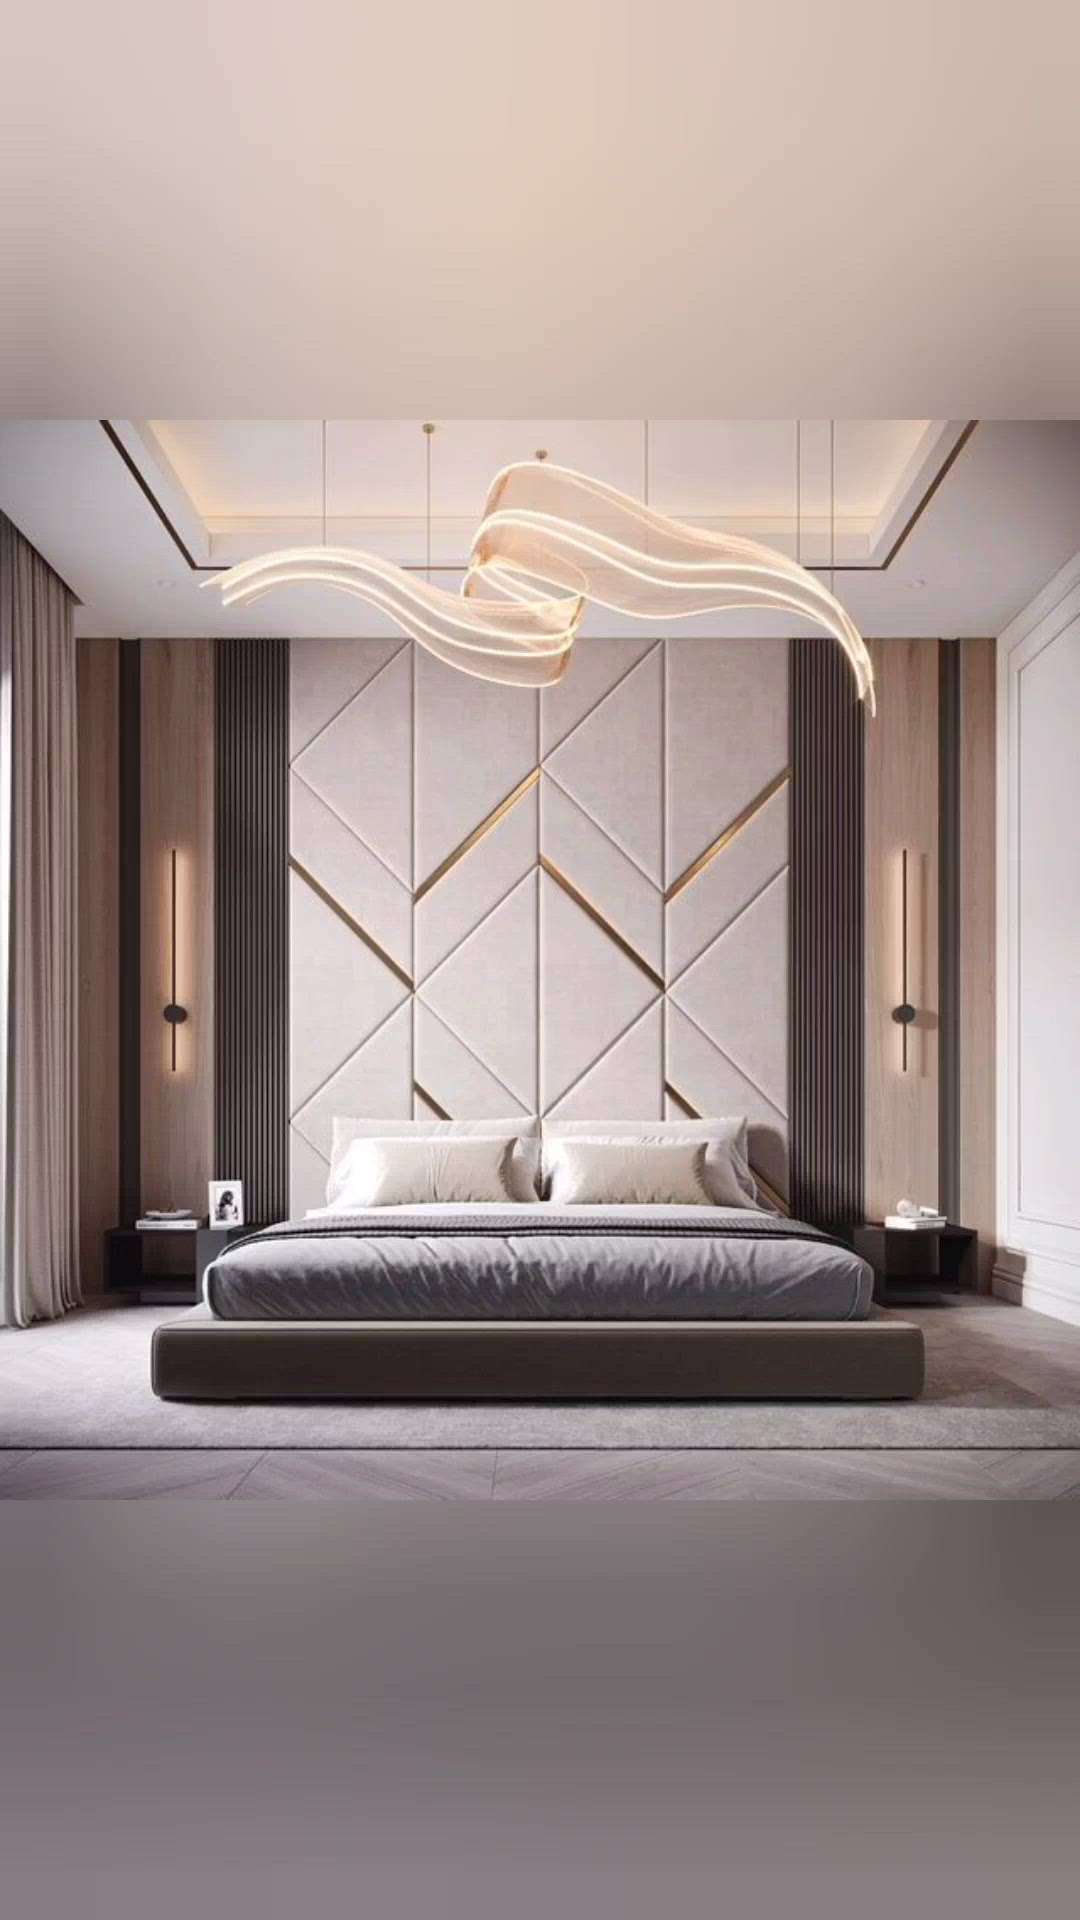 bedroom design ideas  #bedbackdeisgn  #WardrobeIdeas  #modularTvunits  #HomeDecor  #BedroomDecor  #brightinteriors  #interiorcontractor